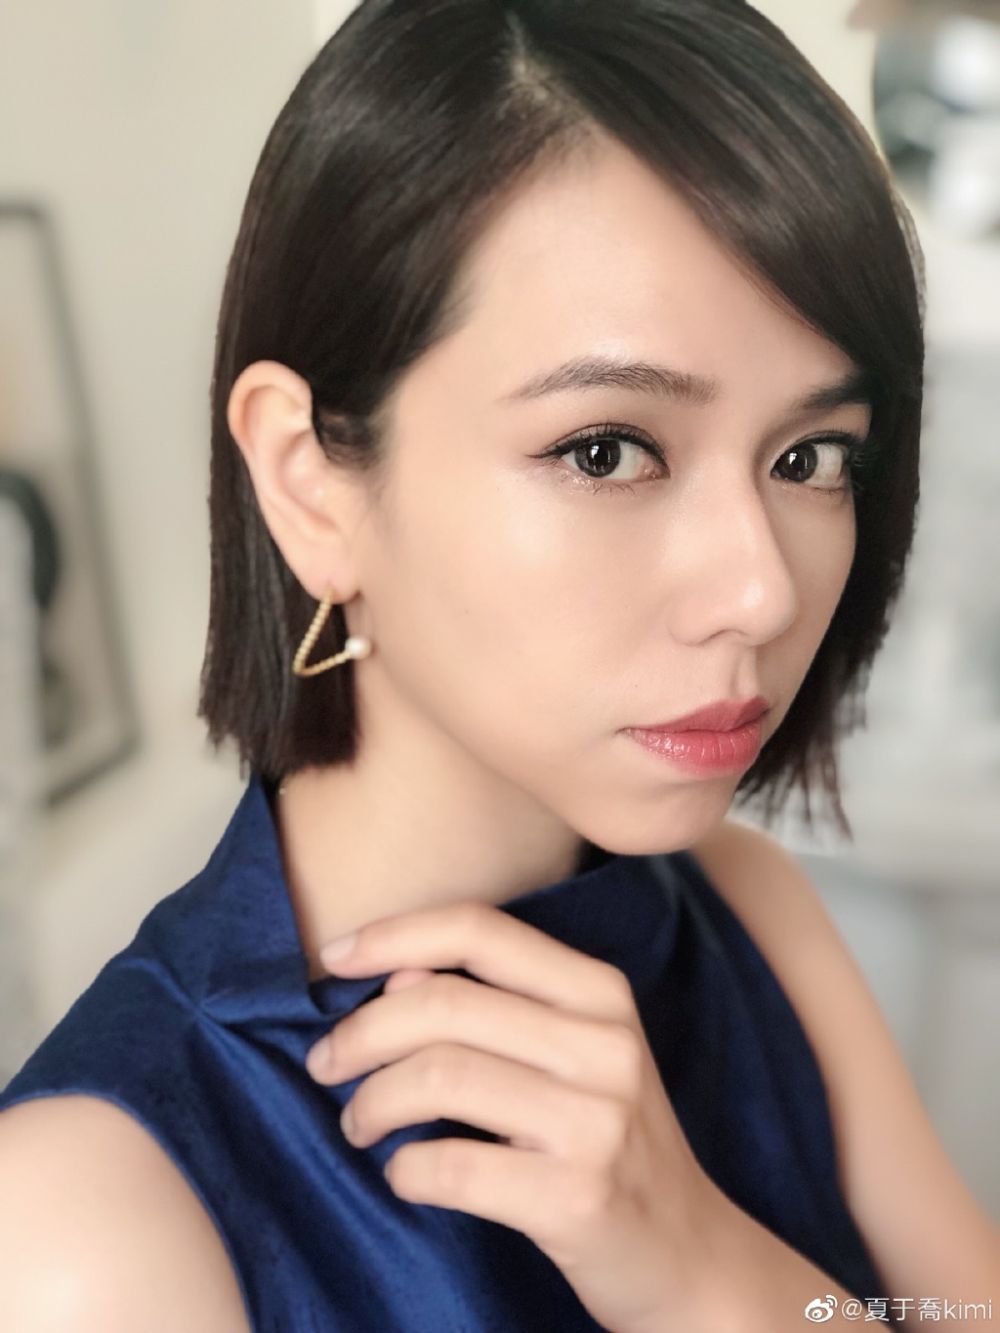 Kimi Hsia Sexy and Hottest Photos , Latest Pics